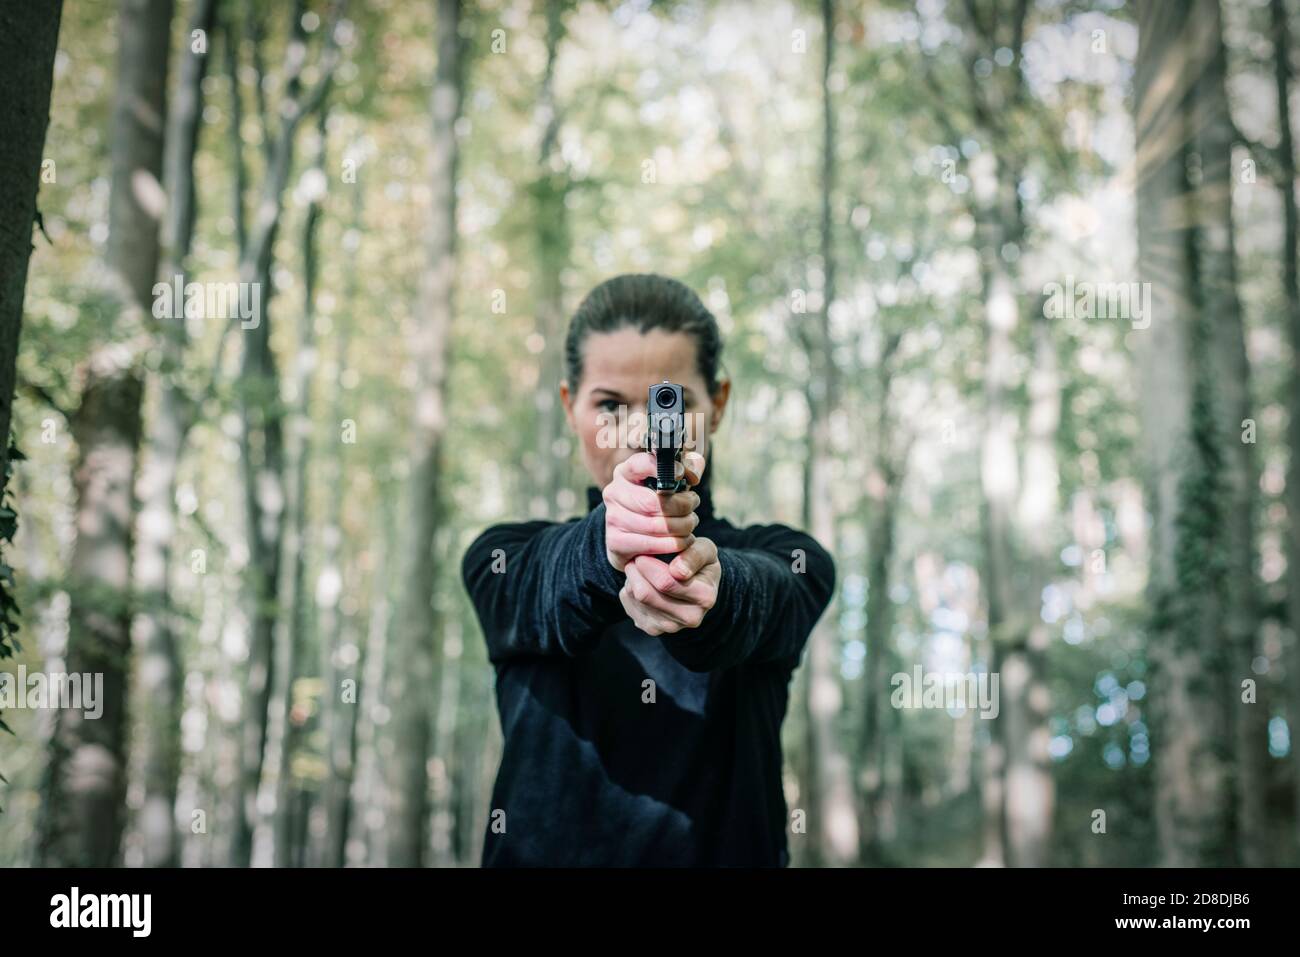 Woman with a handgun aiming towards the camera. Stock Photo